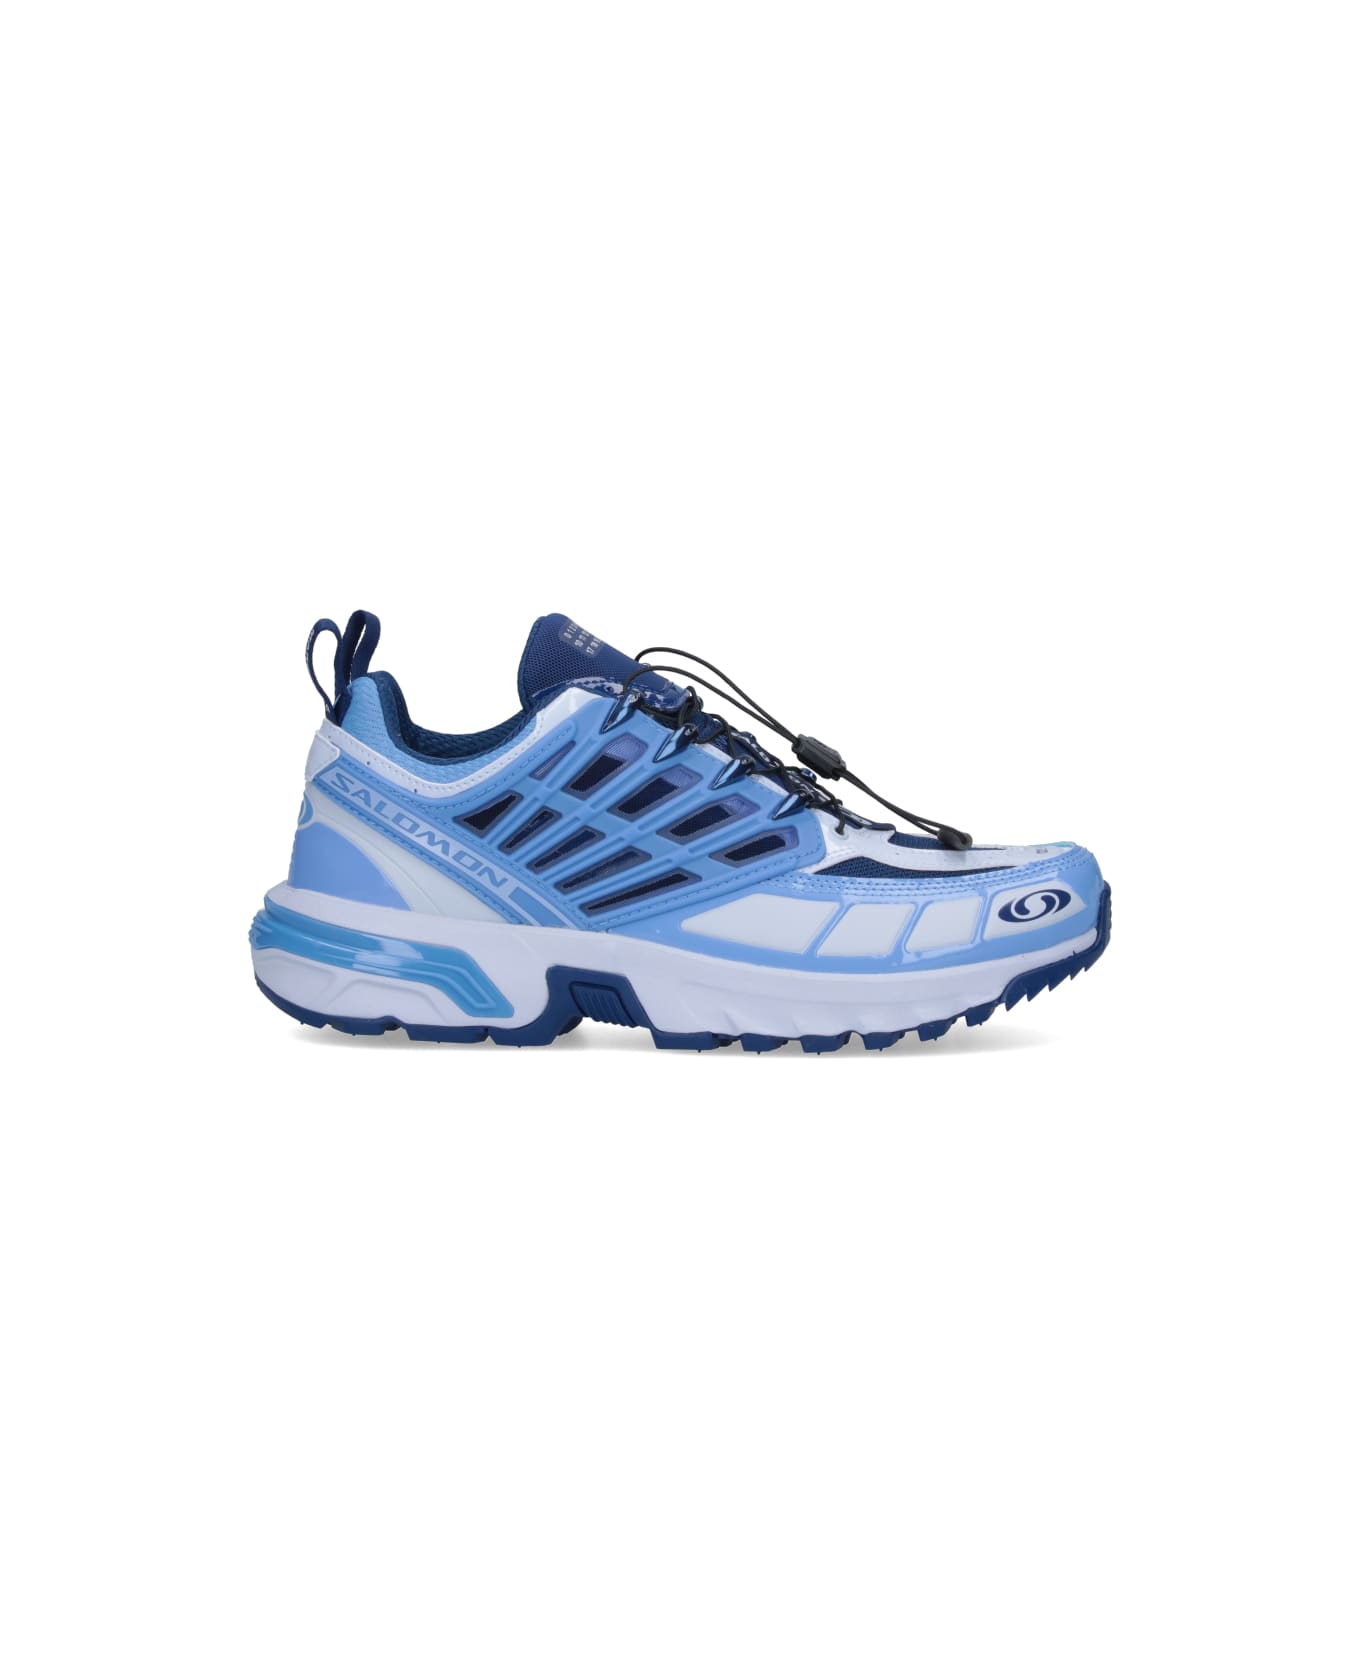 MM6 Maison Margiela Acs Pro Sneakers - Light blue